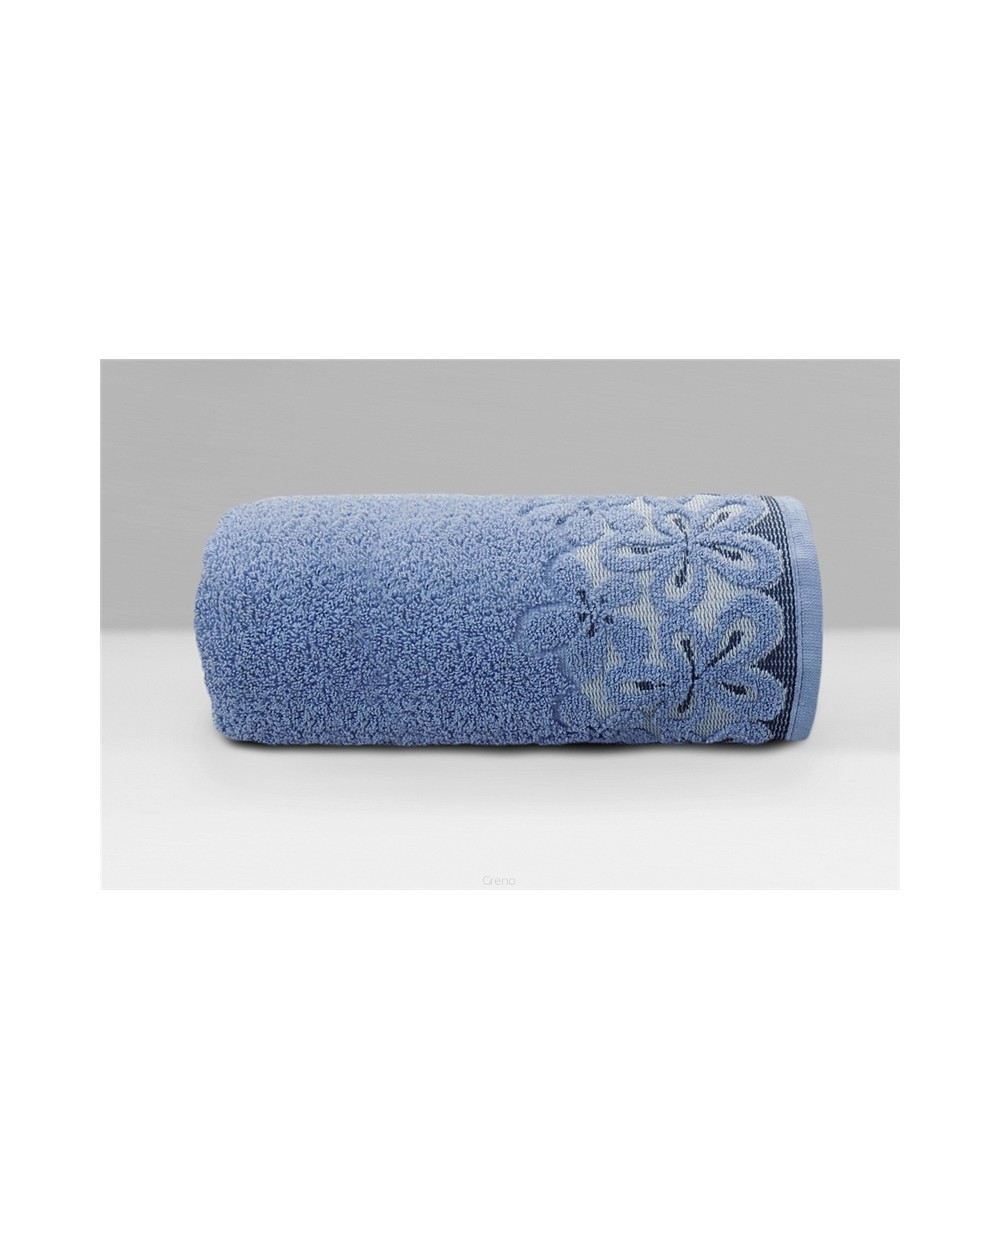 Ręcznik Bella mikrobawełna 70x140 denim